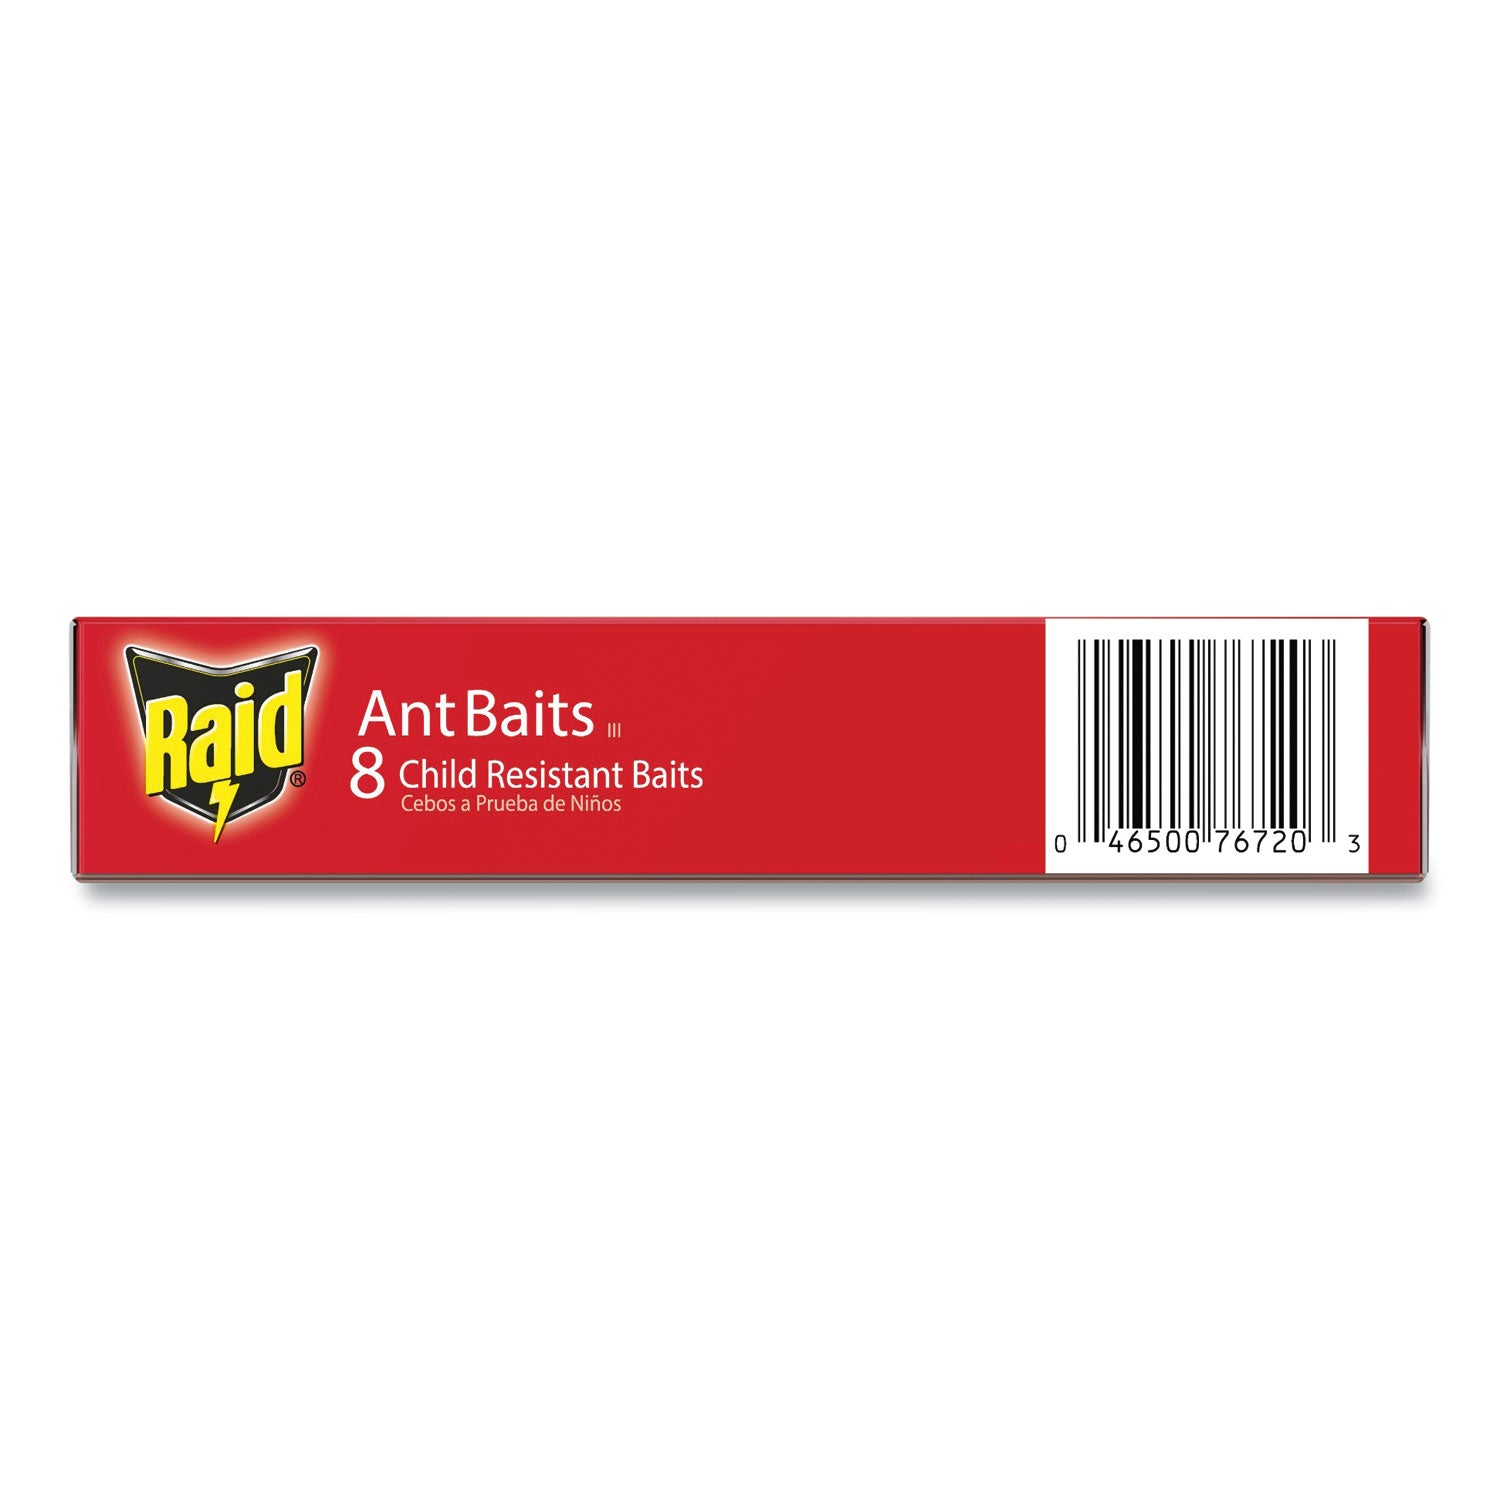 ant-baits-024-oz-8-box-12-boxes-carton_sjn308819 - 3